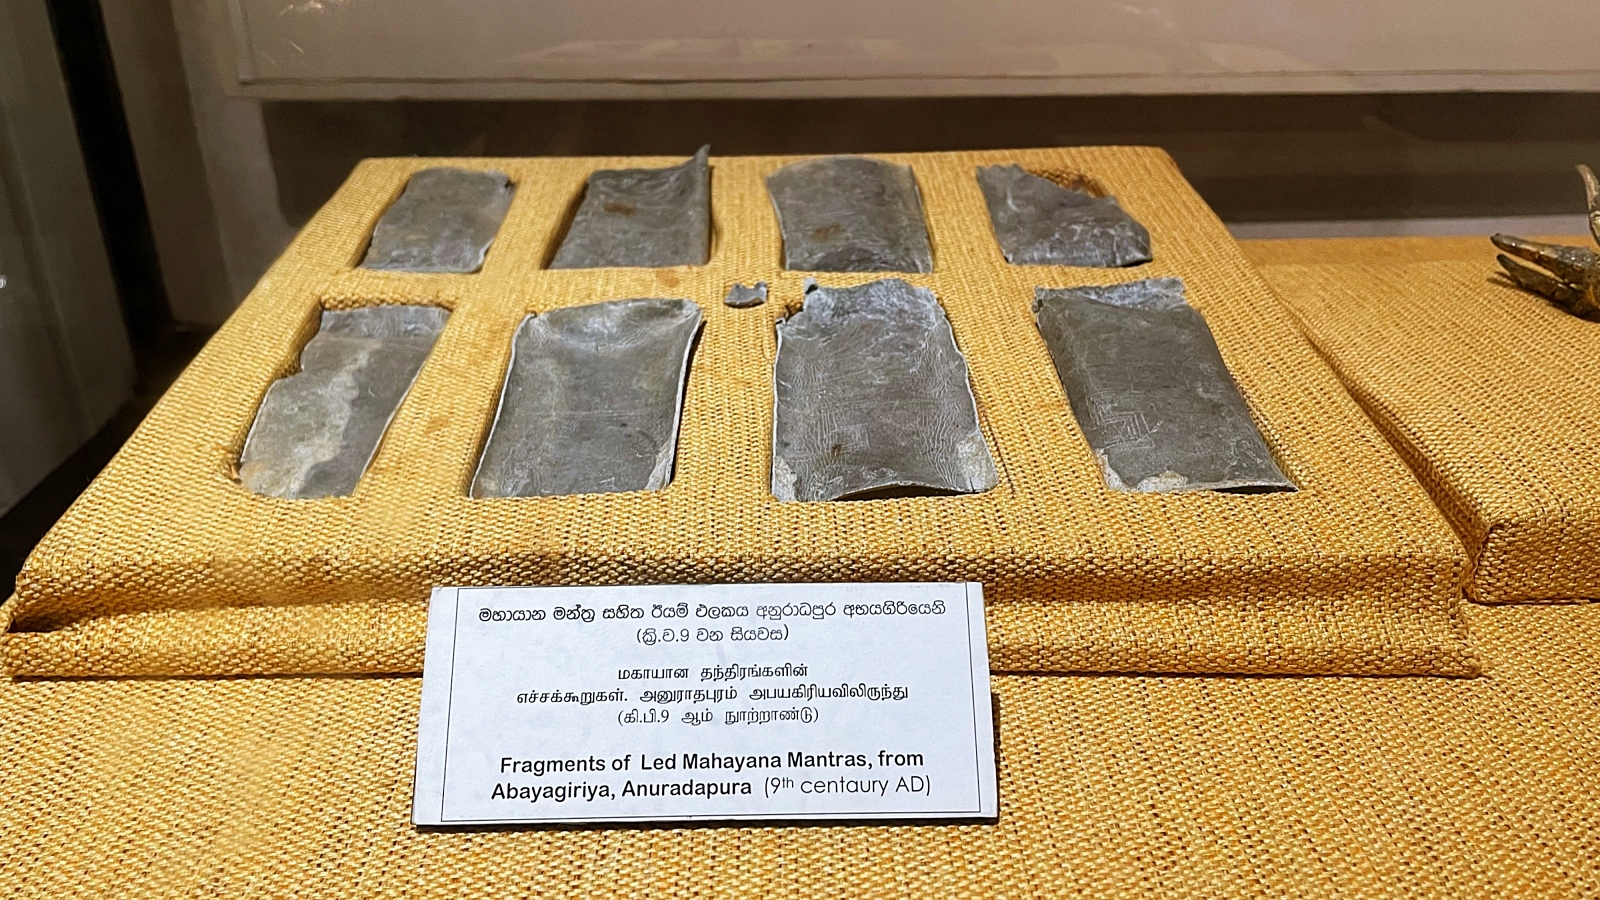 Fragments of Led Mahayana Mantras from Abayagiriya